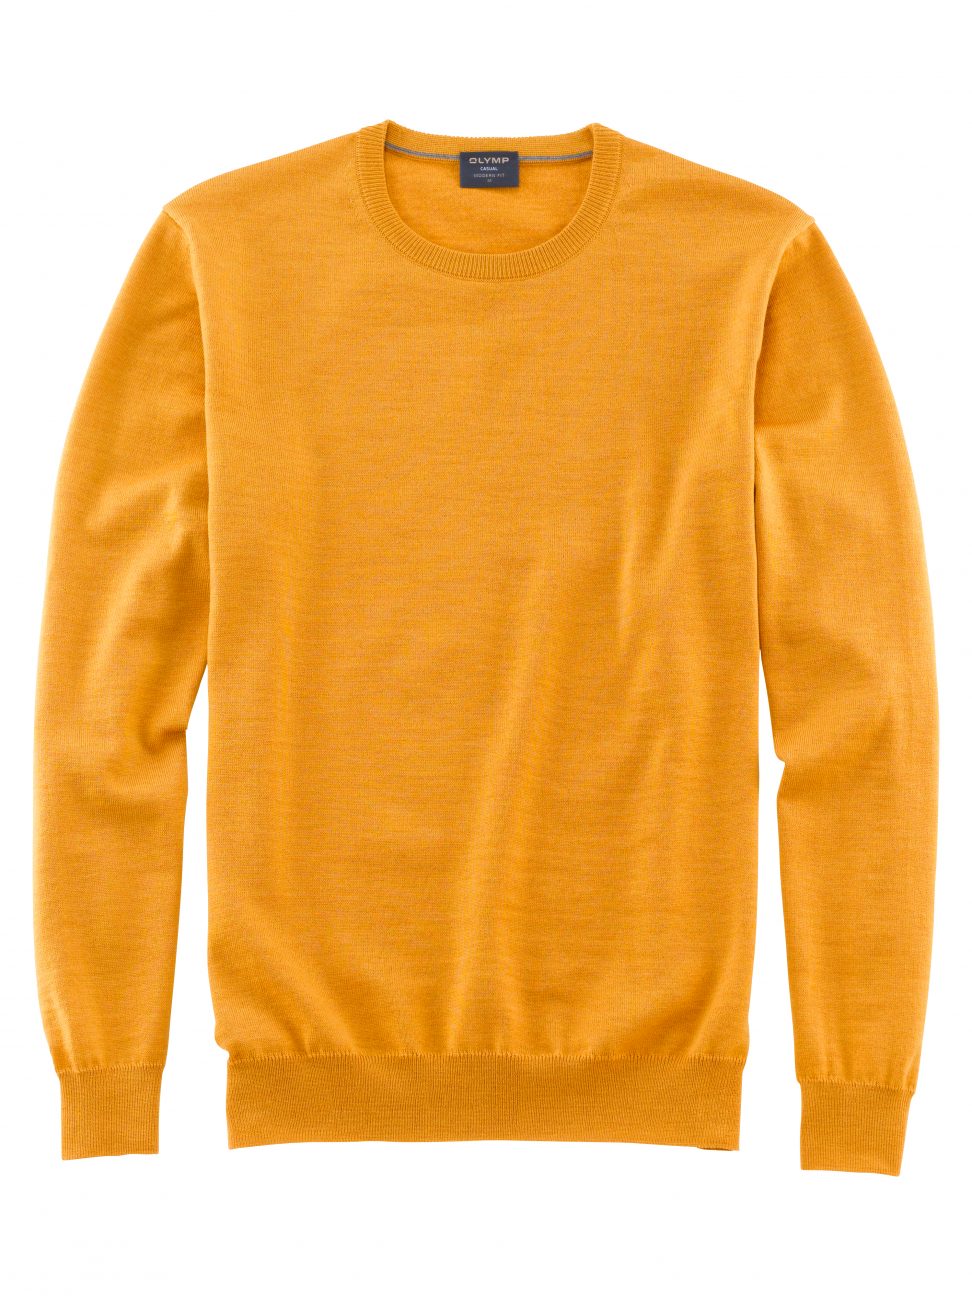 Sweter  OLYMP  modern fit / ŻÓŁTY / Pullover crew neck / 01501154 wełna merinos